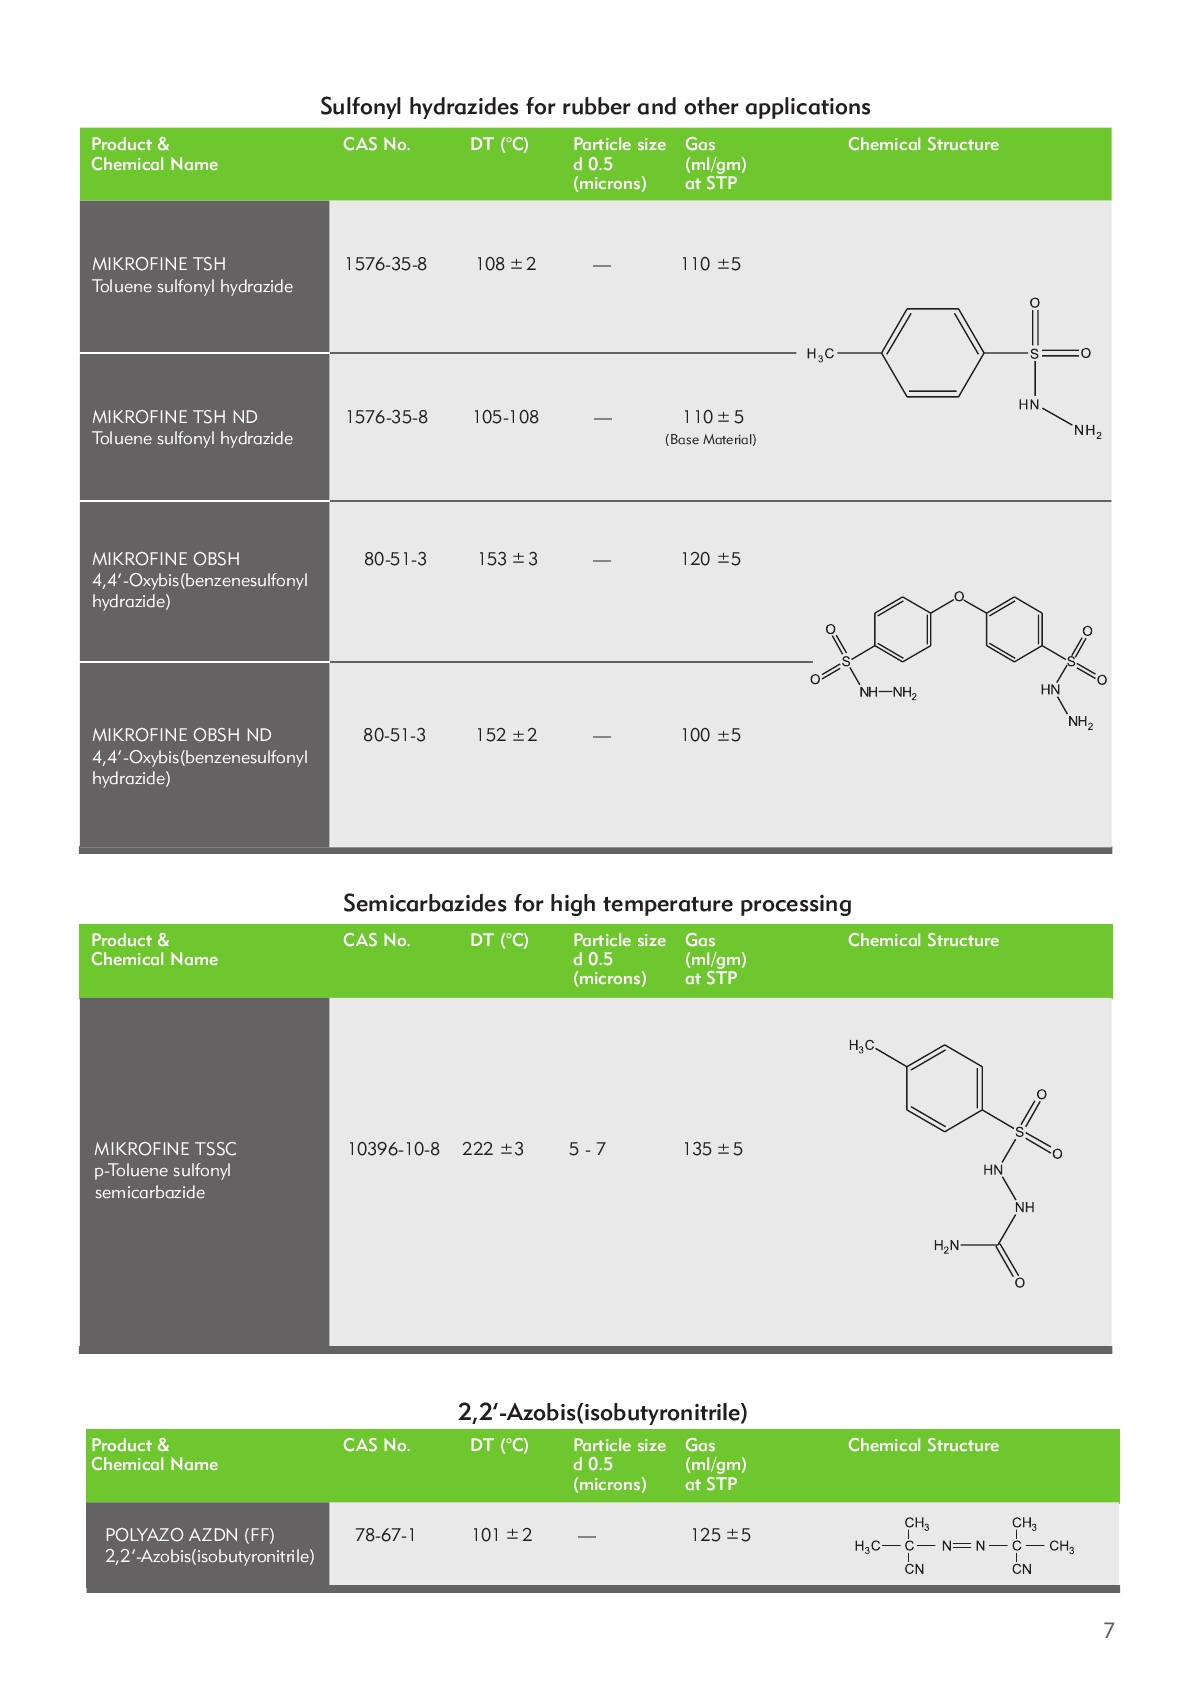 Sulfonyl Hidrazides and Semicarbazides